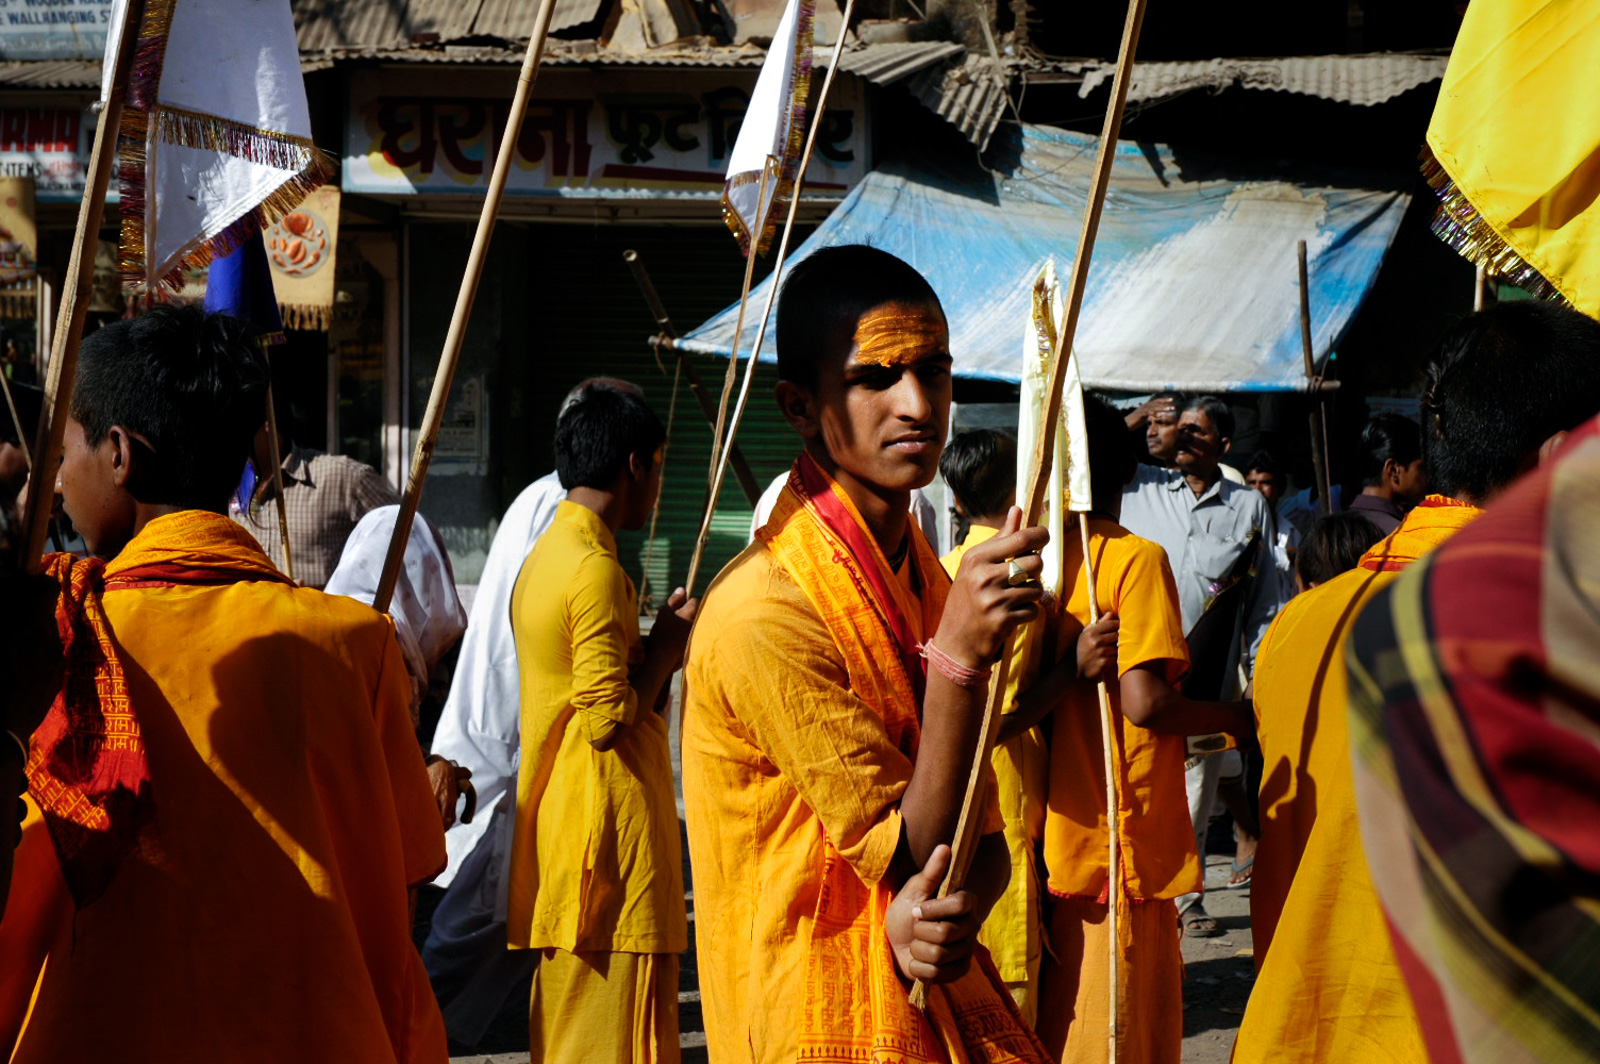  Varanasi, India 2006 